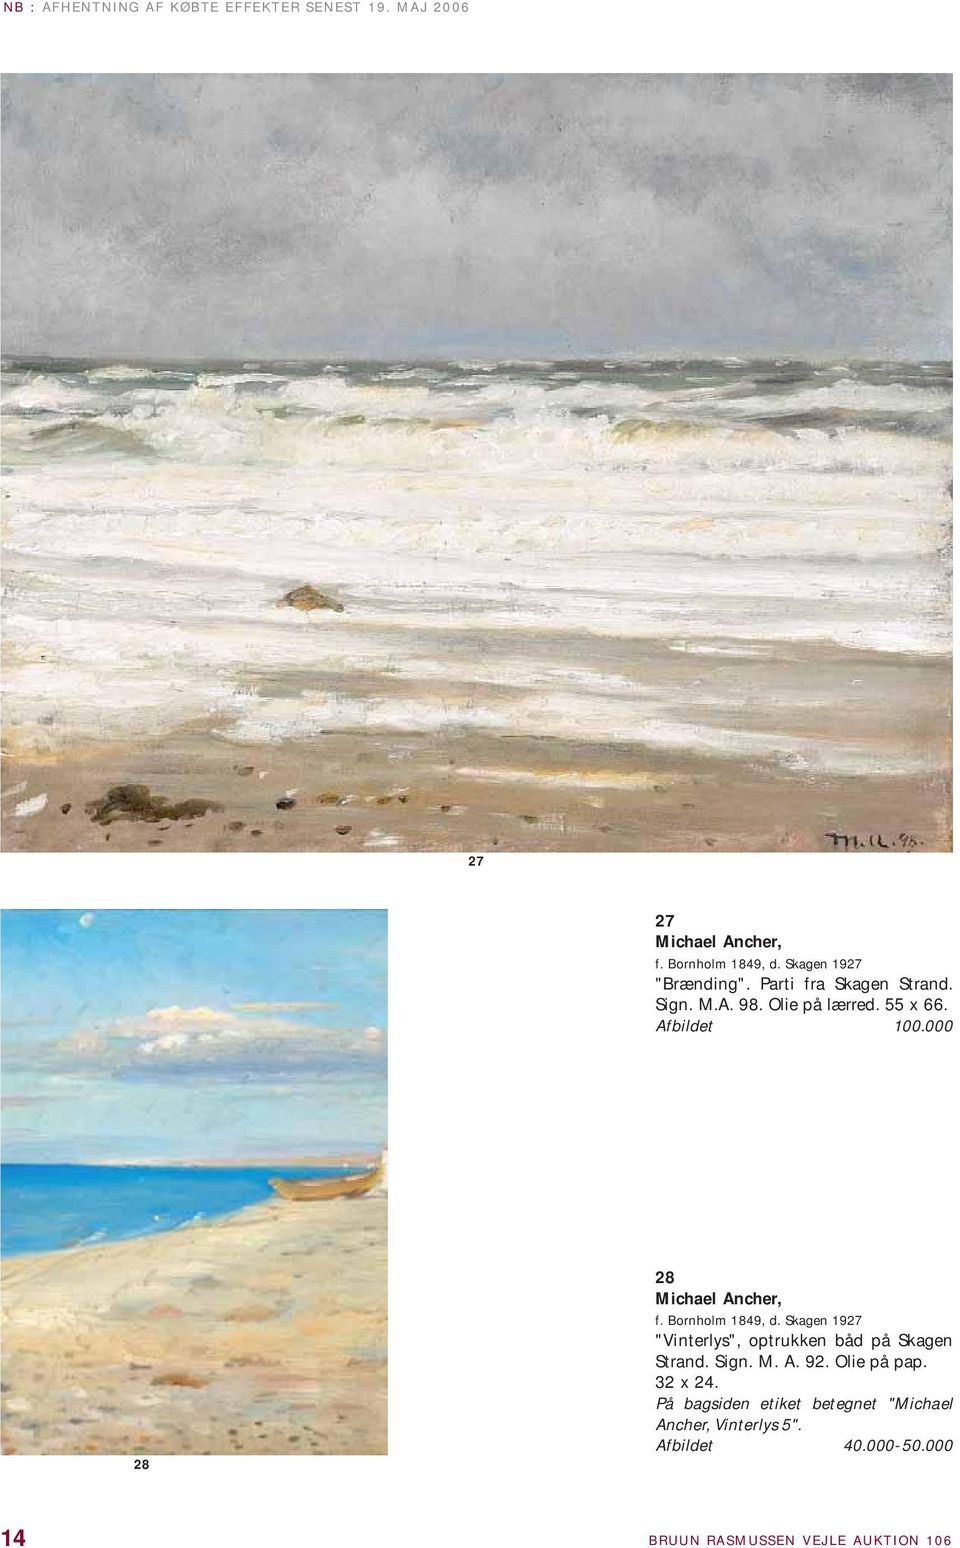 000 28 28 Michael Ancher, f. Bornholm 1849, d. Skagen 1927 "Vinterlys", optrukken båd på Skagen Strand. Sign. M. A. 92.